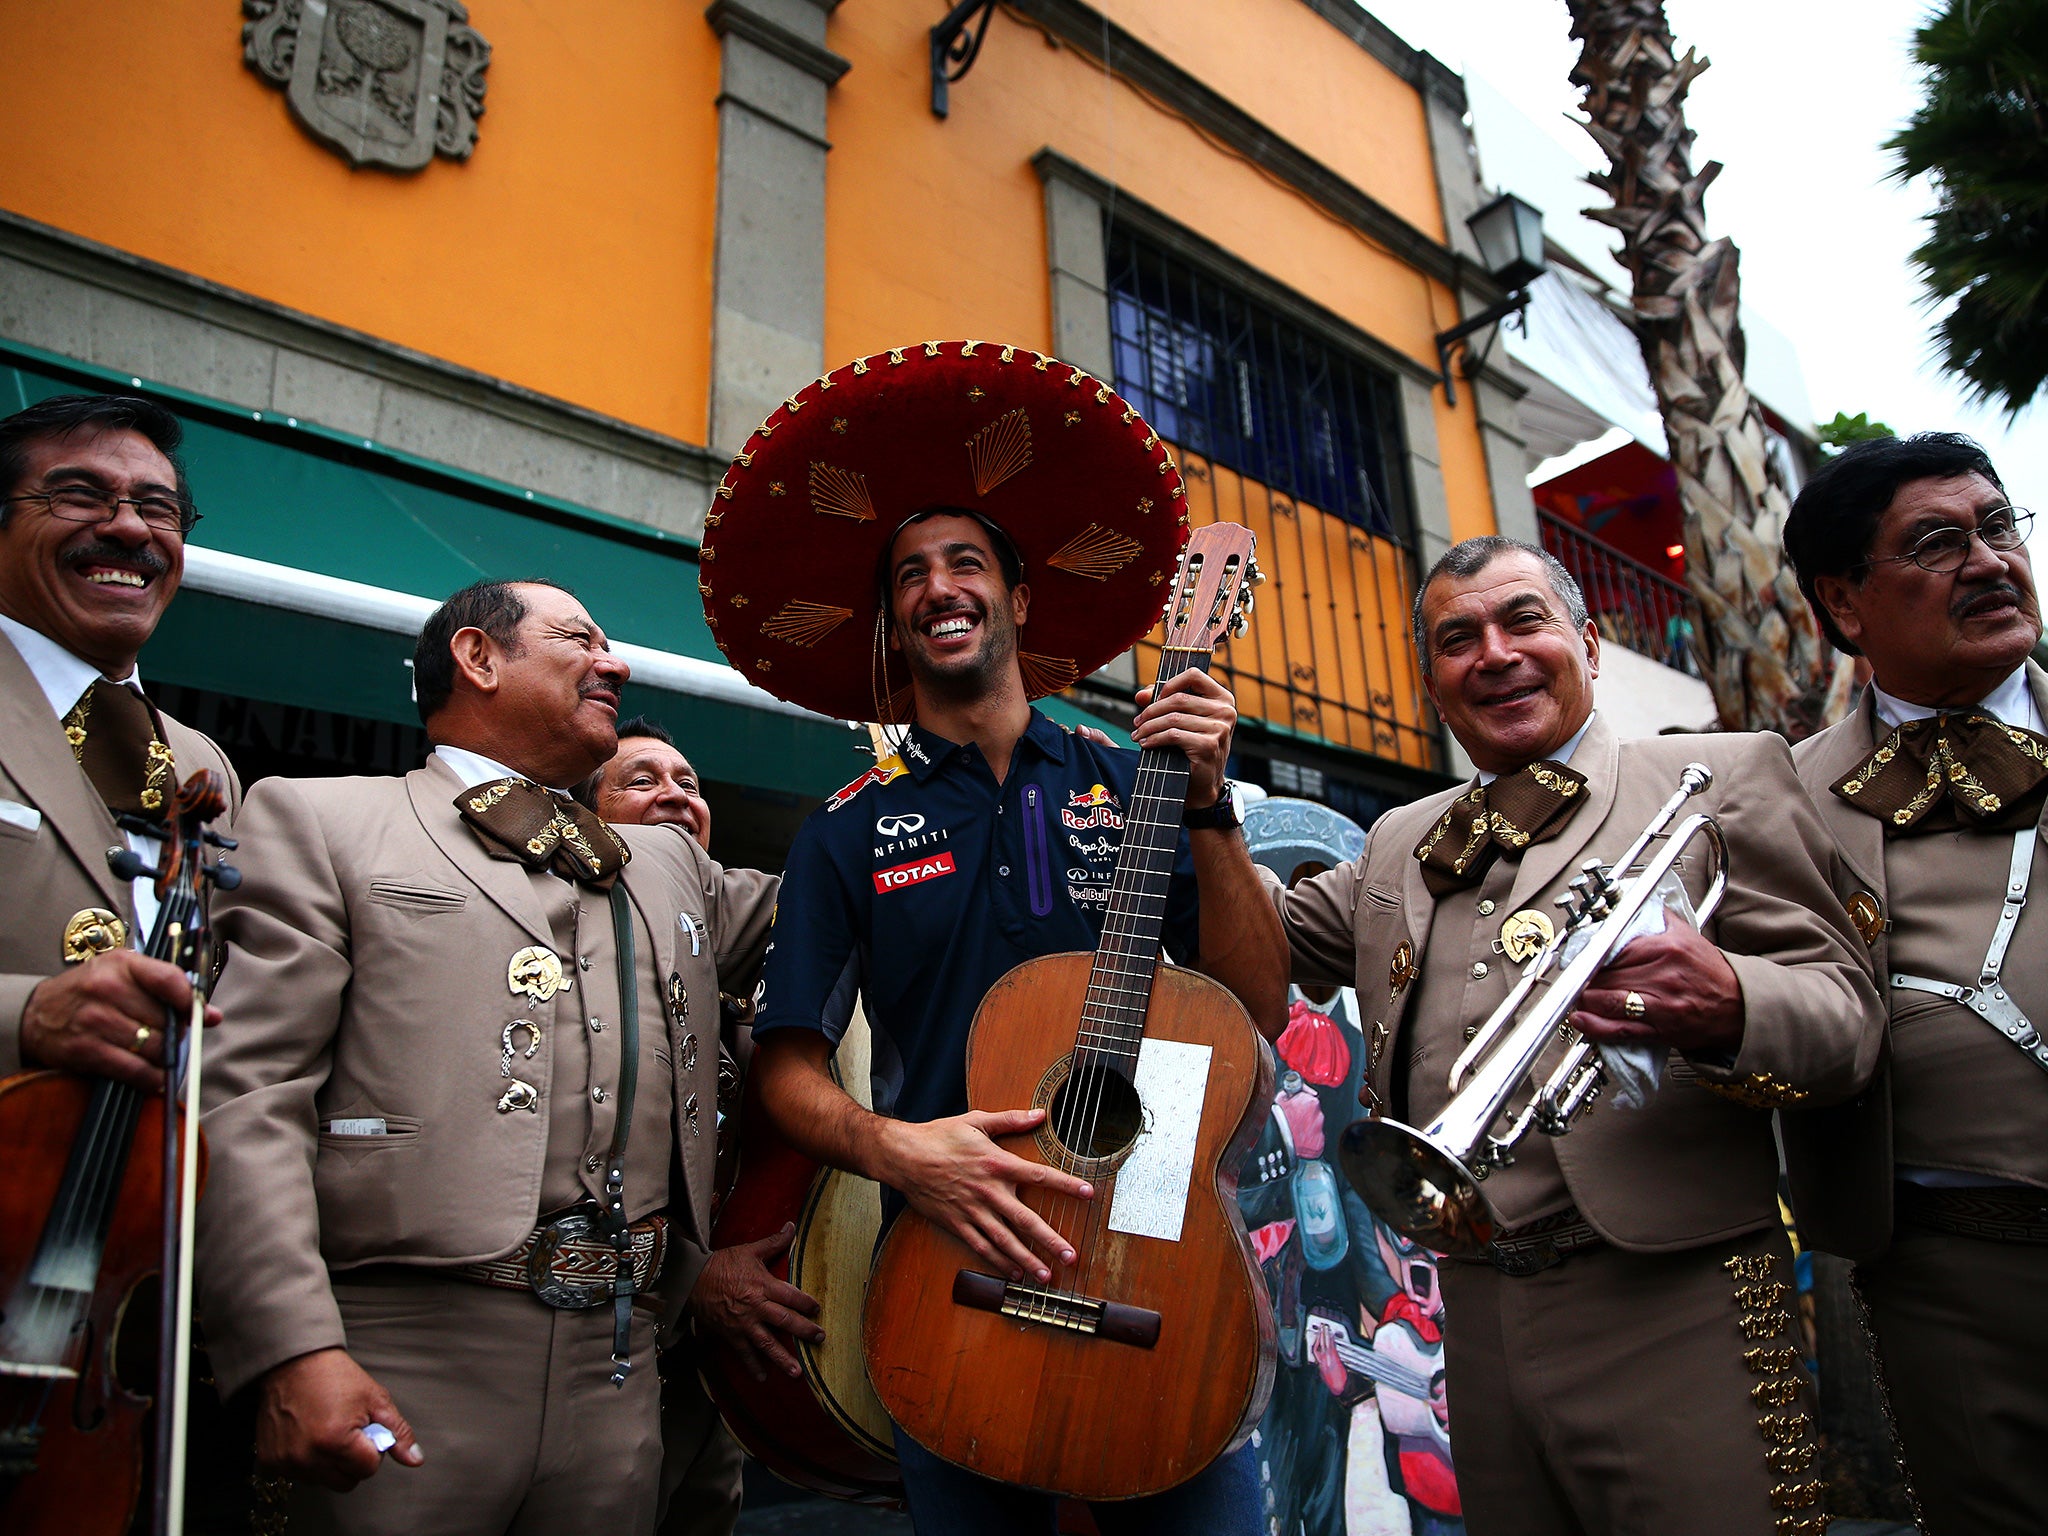 Daniel Ricciardo with a mariachi band